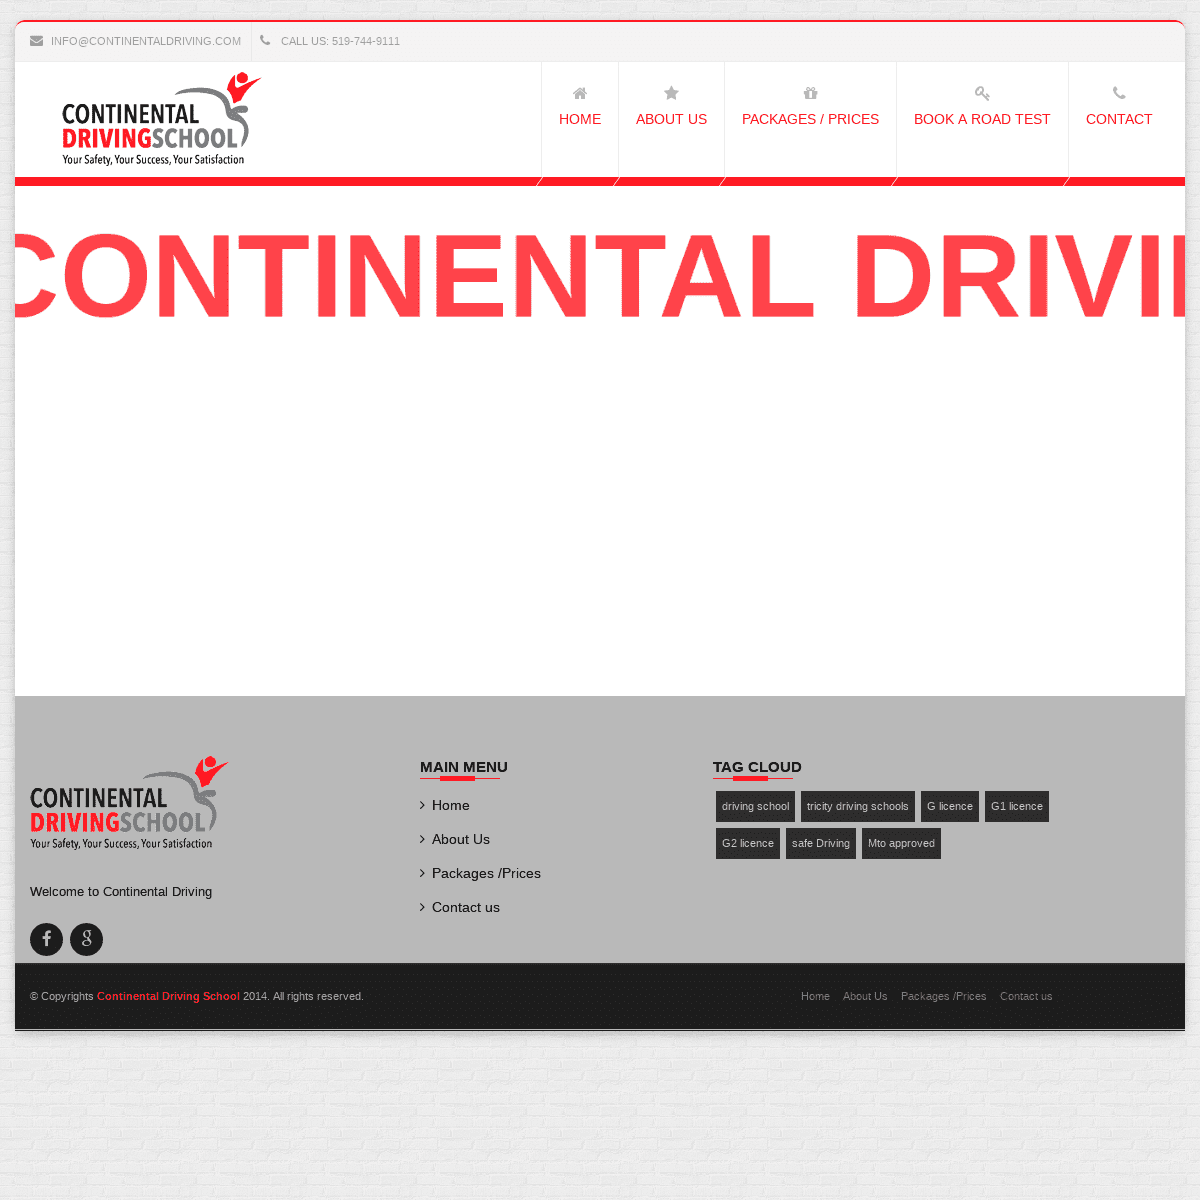 Continental Driving School - Serving Kitchener-Waterloo (KW) Area Since 1976